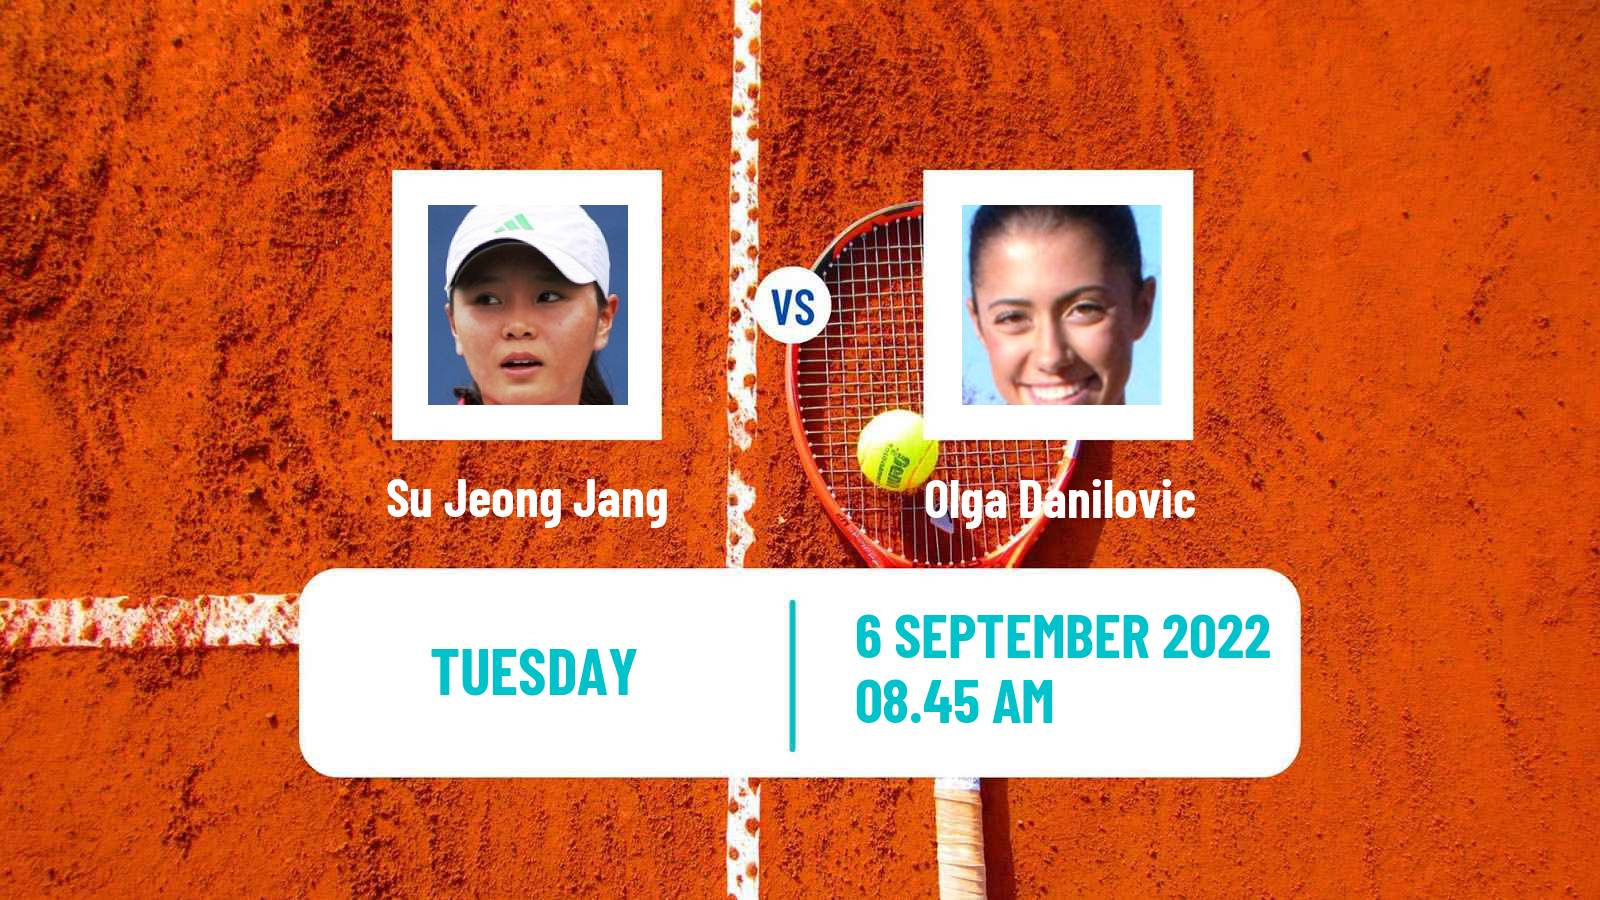 Tennis ATP Challenger Su Jeong Jang - Olga Danilovic